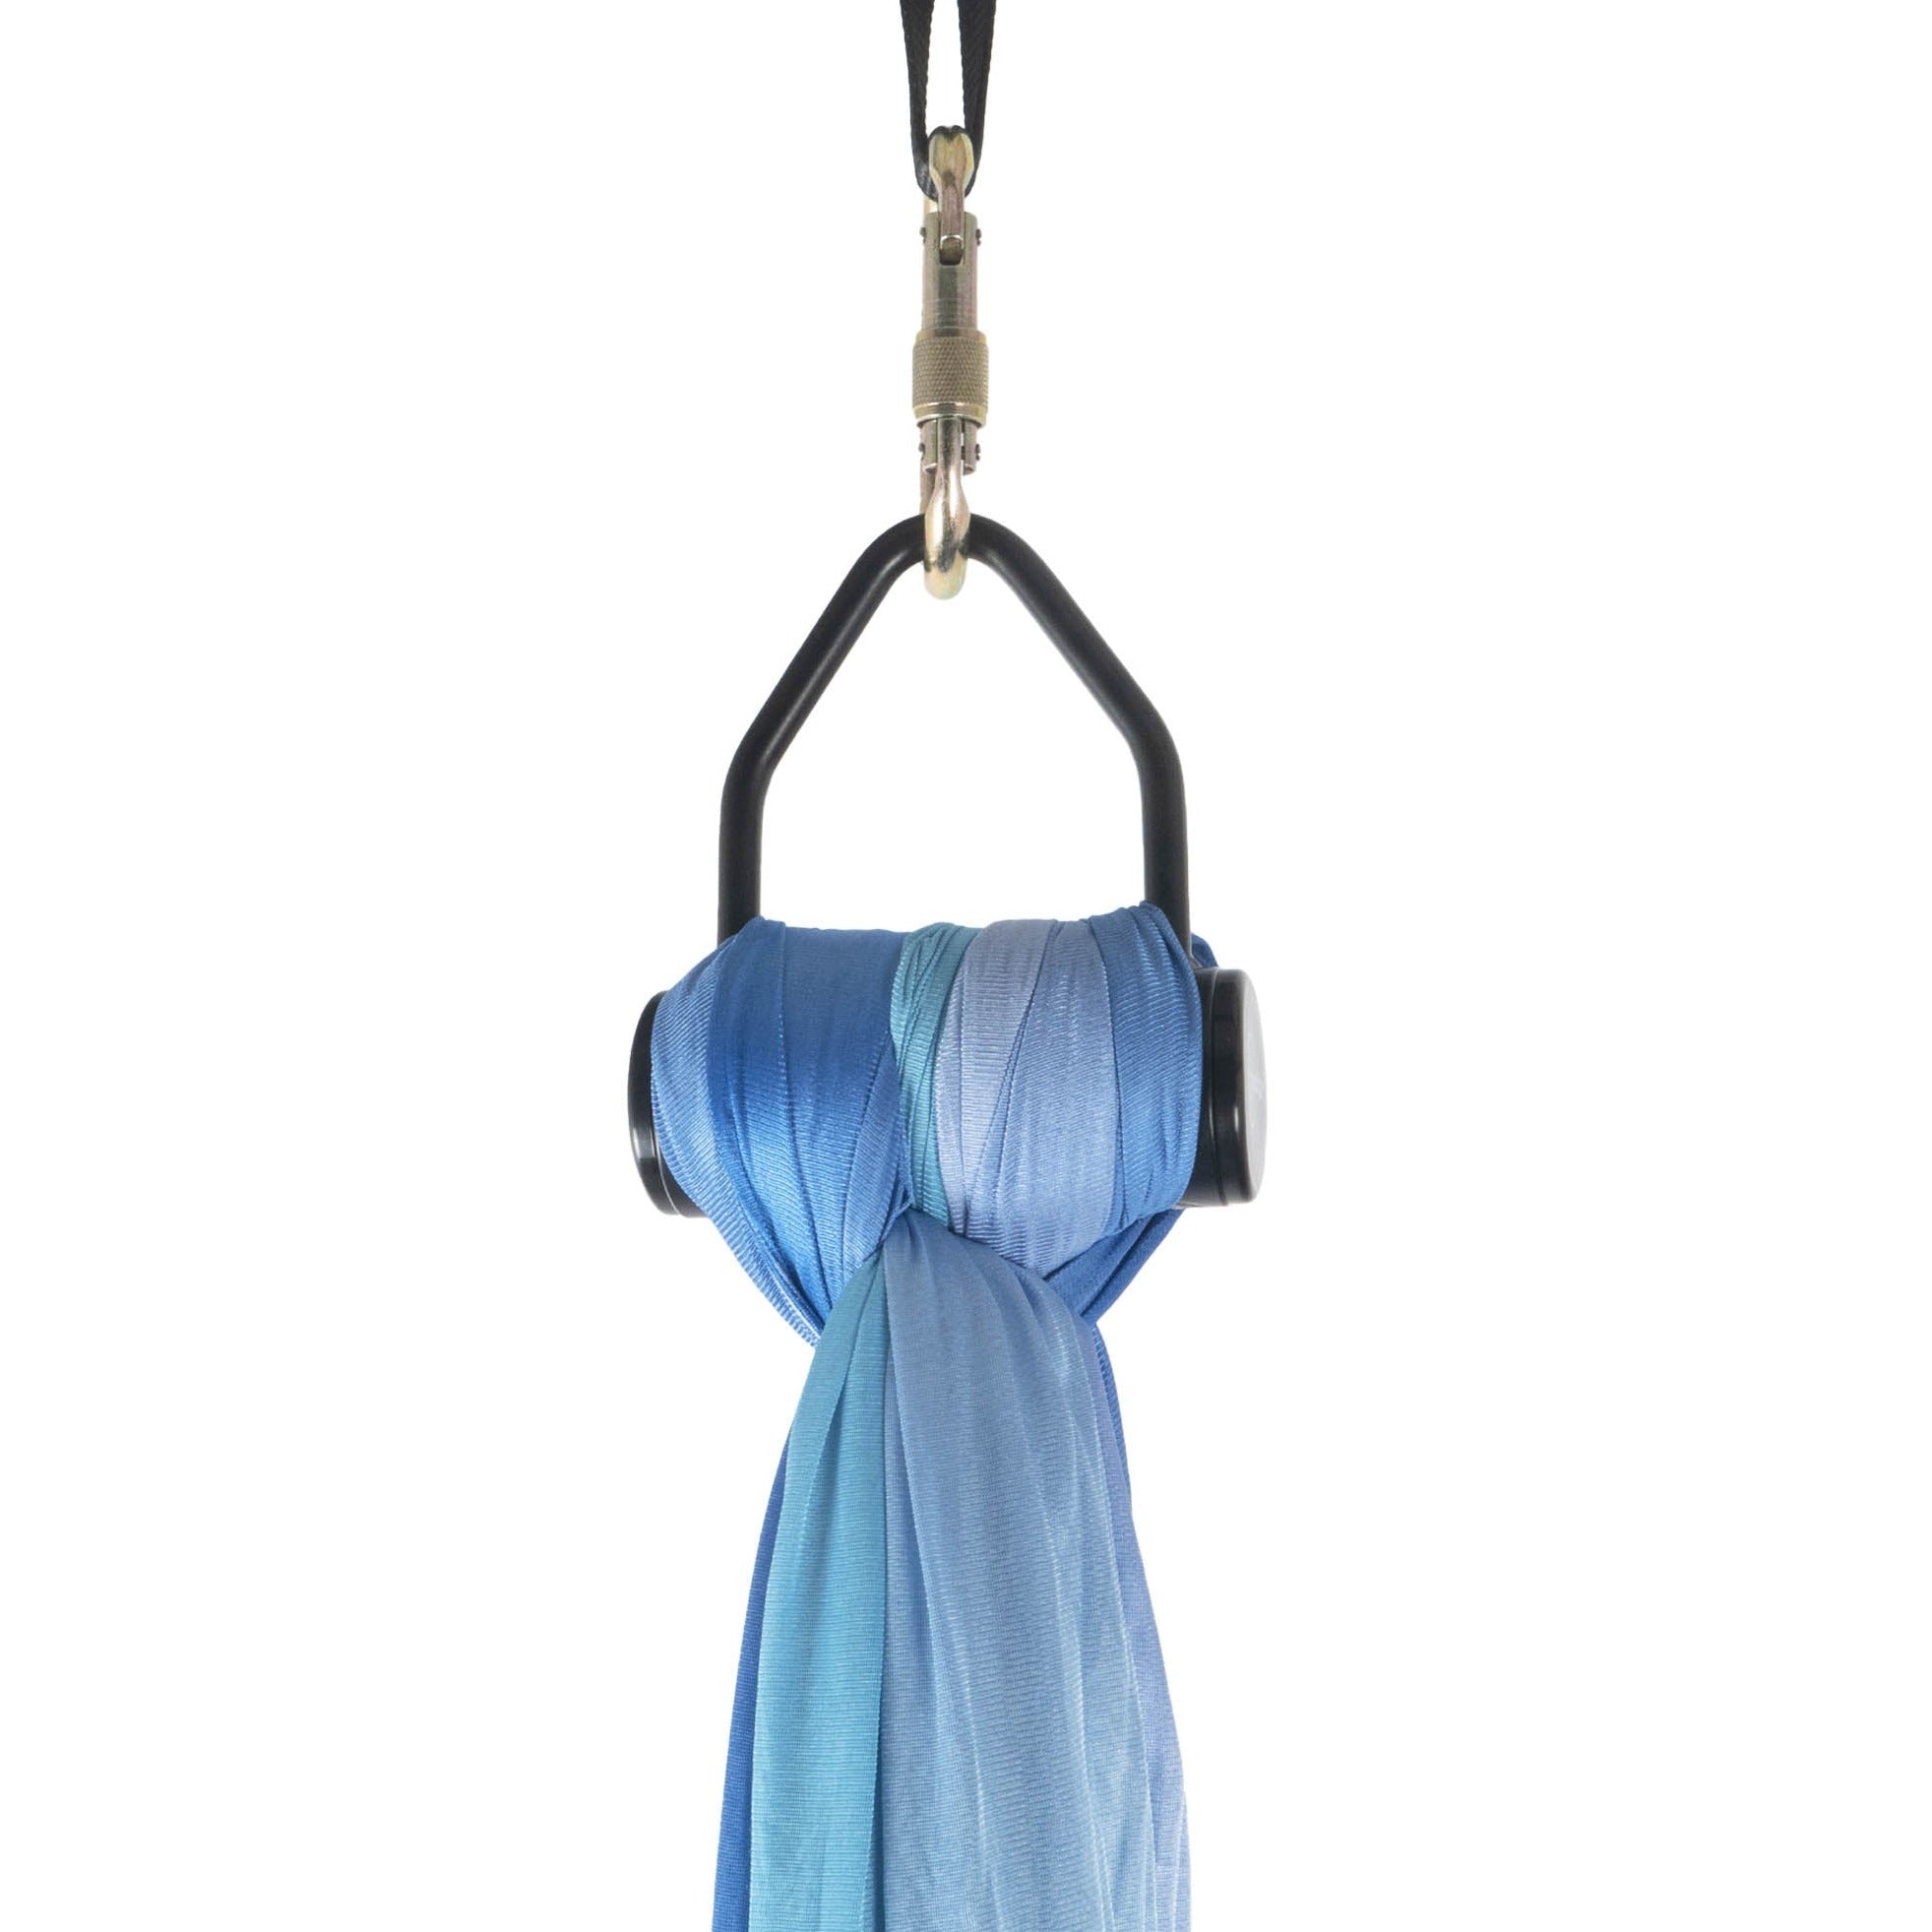 Prodigy aerial silk hook hanging silks, close up straight on